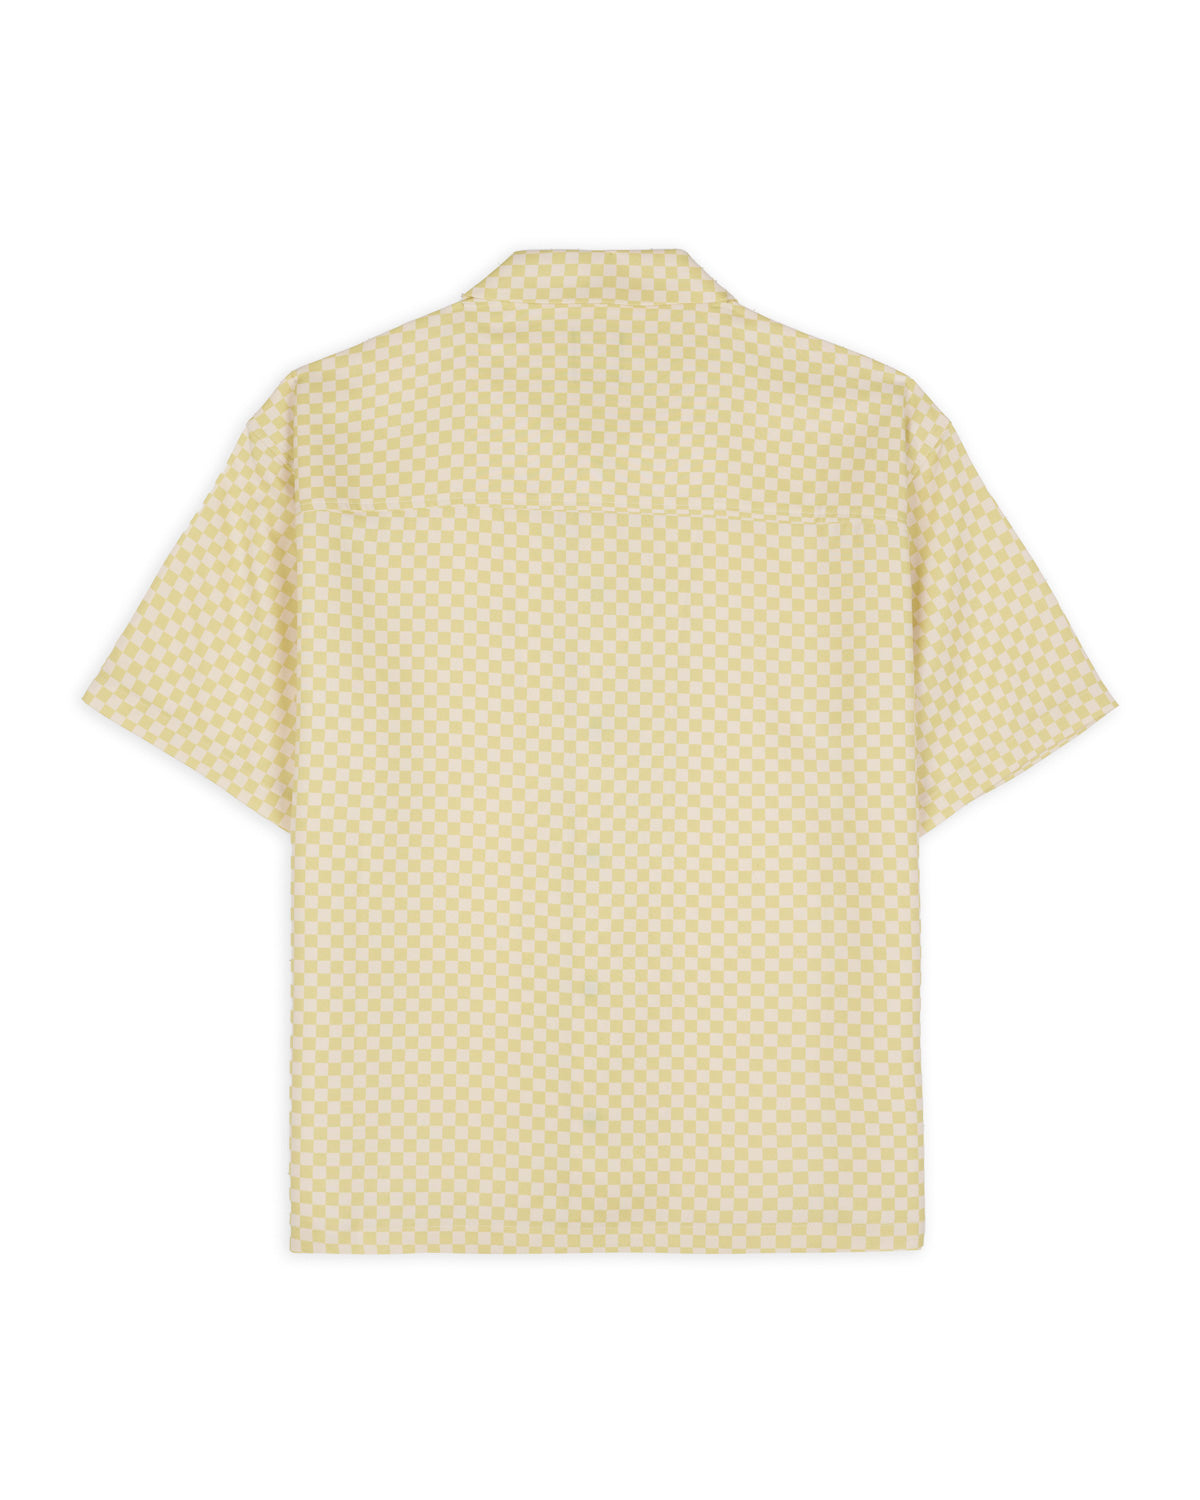 Micro Check Short Sleeve Snap Shirt - Keylime 2